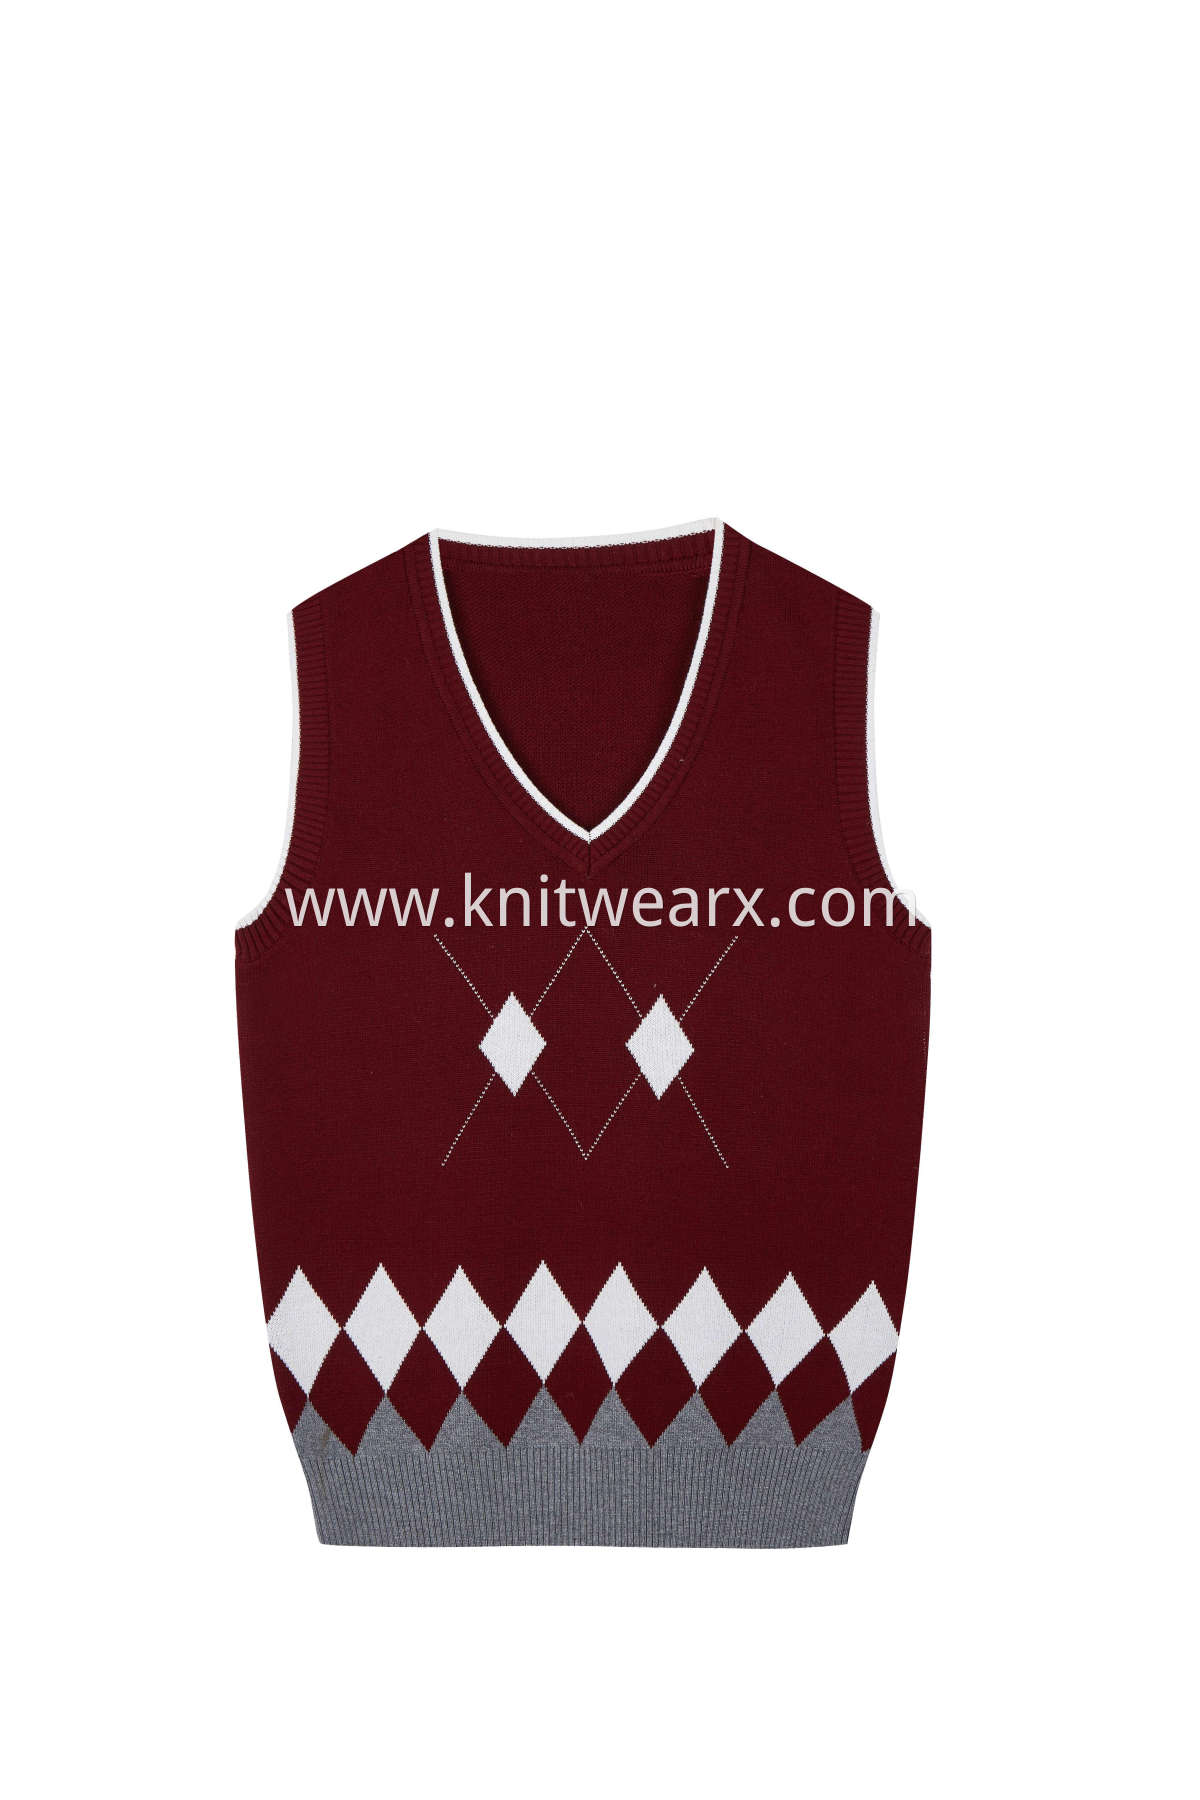 Kids's Sweater Jarquard Argyle Vest Cotton V-Neck School Uniform Pullover Top